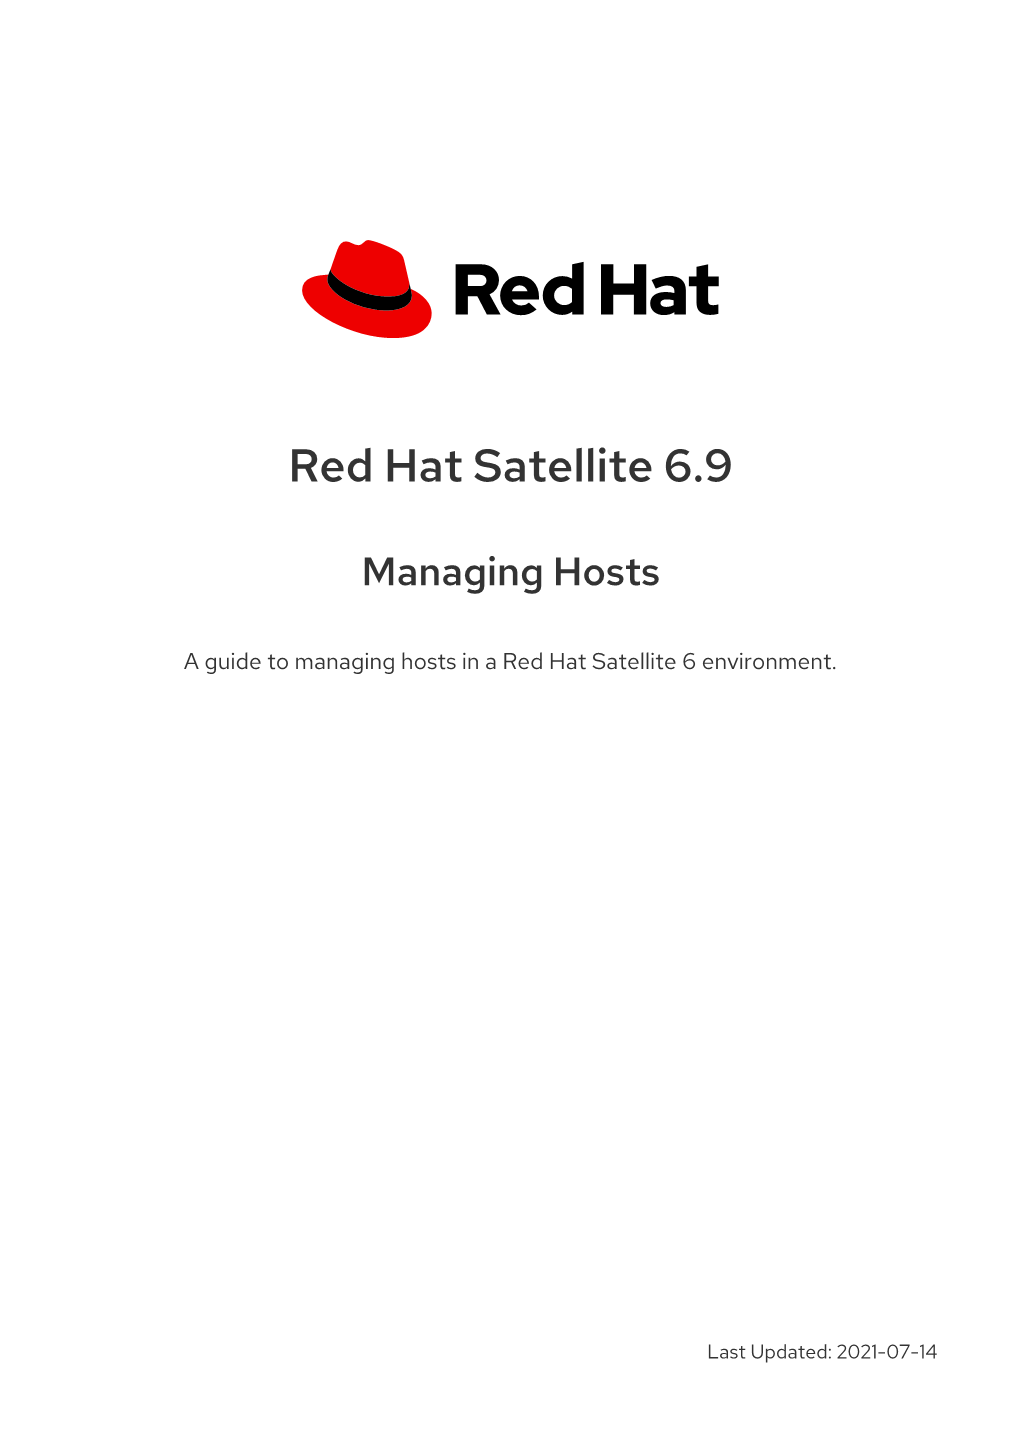 Red Hat Satellite 6.9 Managing Hosts